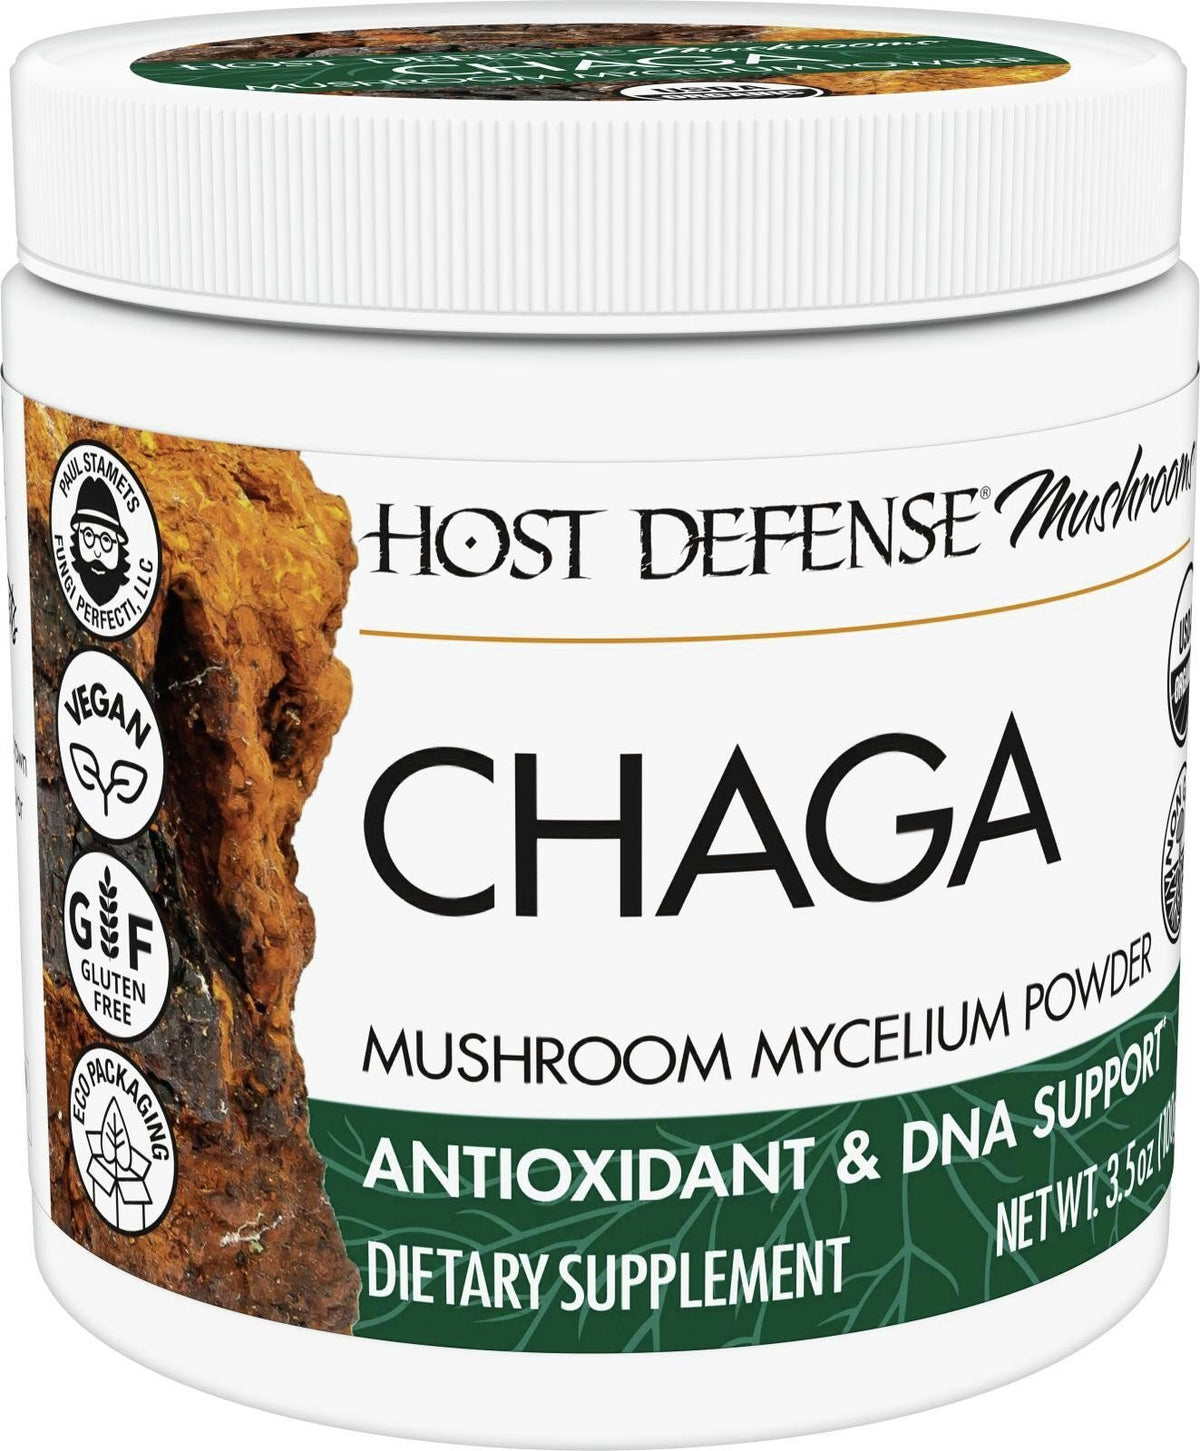 Fungi Perfecti/Host Defense Chaga 3.5 oz (100 g) Powder